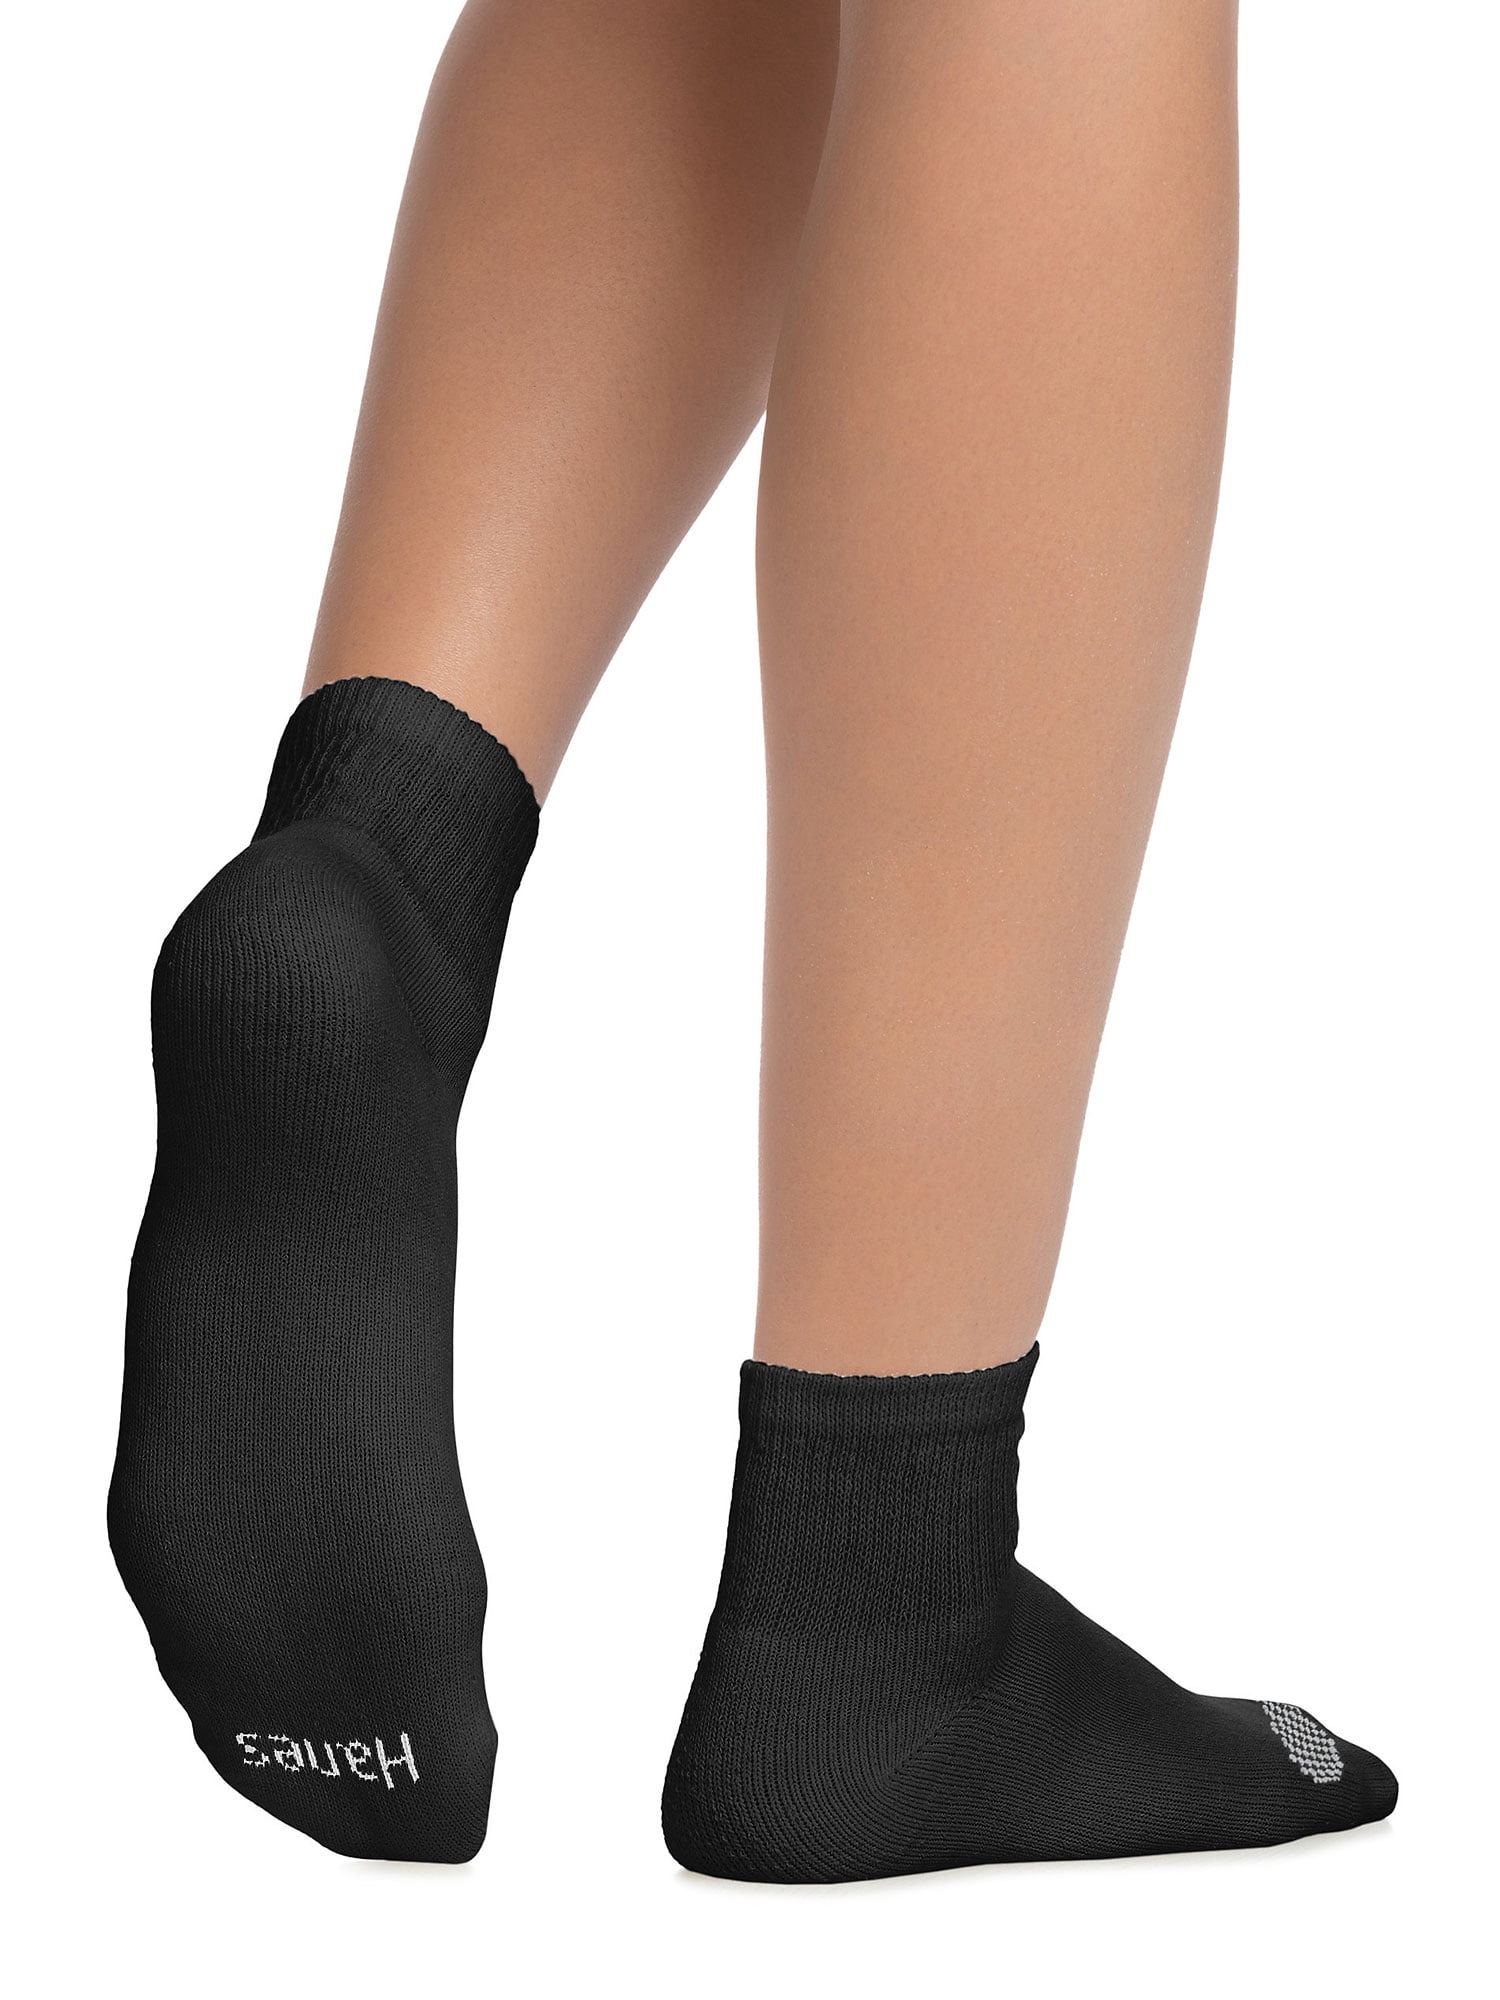 Hanes Women's 6-Pack Lightweight Breathable Ventilation Ankle Socks 